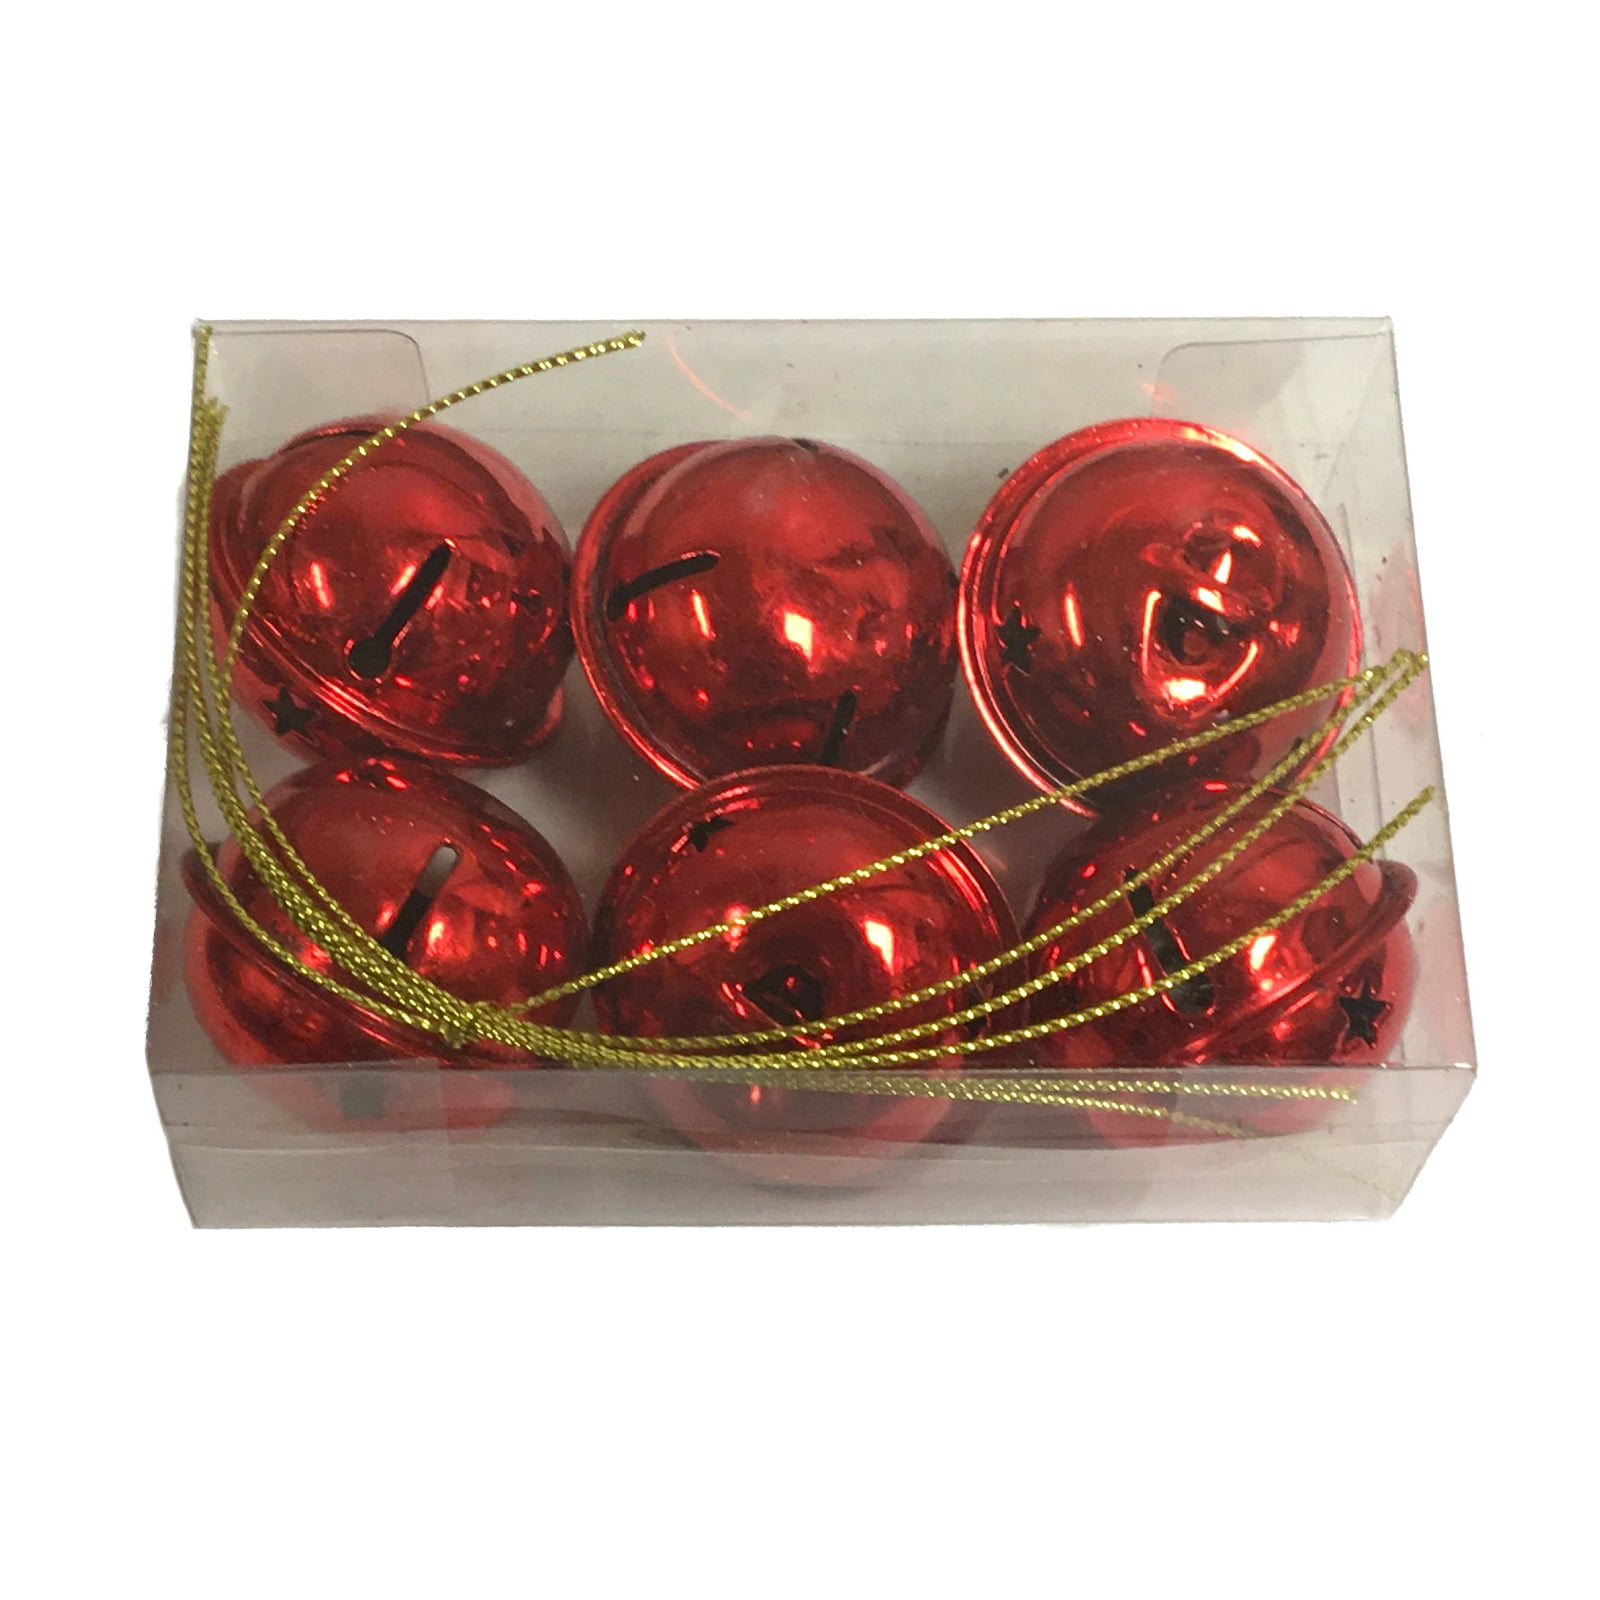 New 9 counts Christmas Jingle Bells Ornaments Decorative Metal Green Gold Red